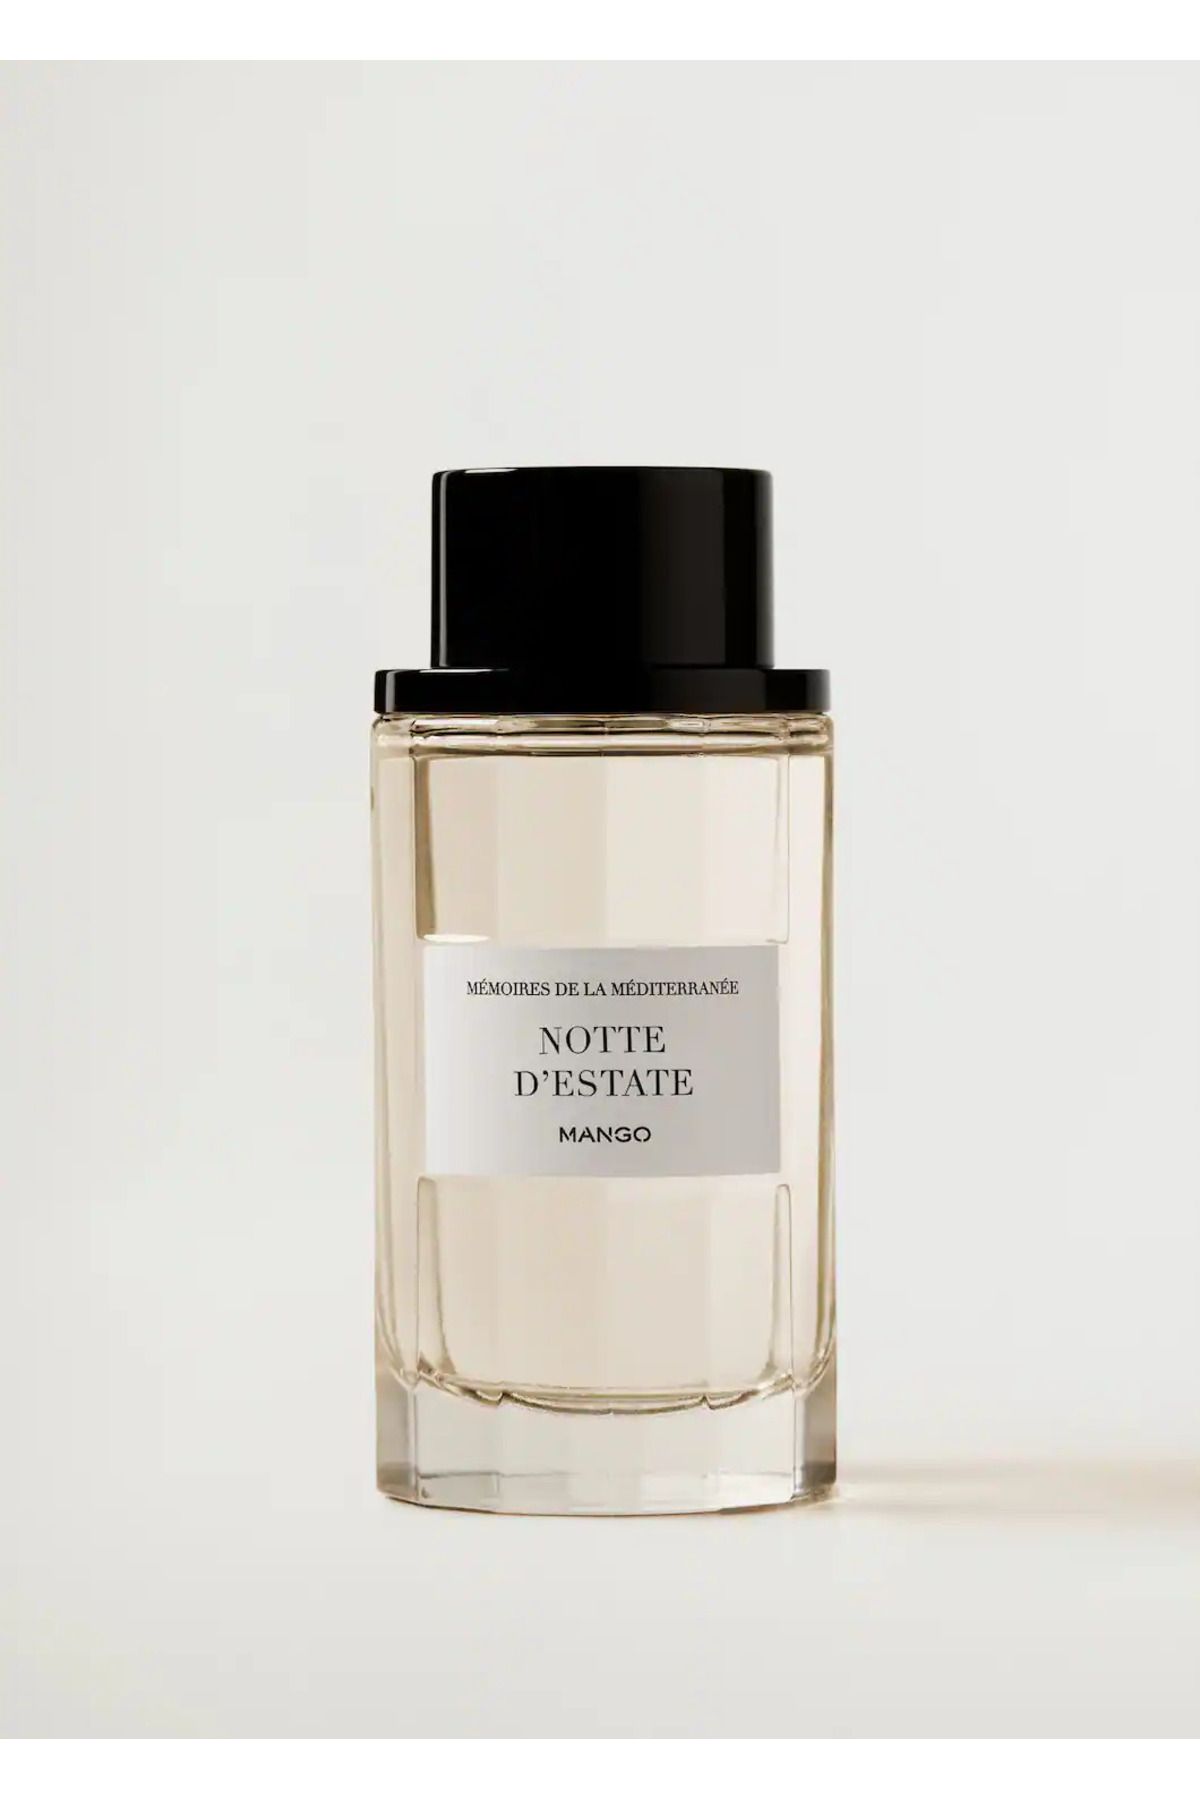 MANGO Notte d'Estate 100 ml kadın parfümü